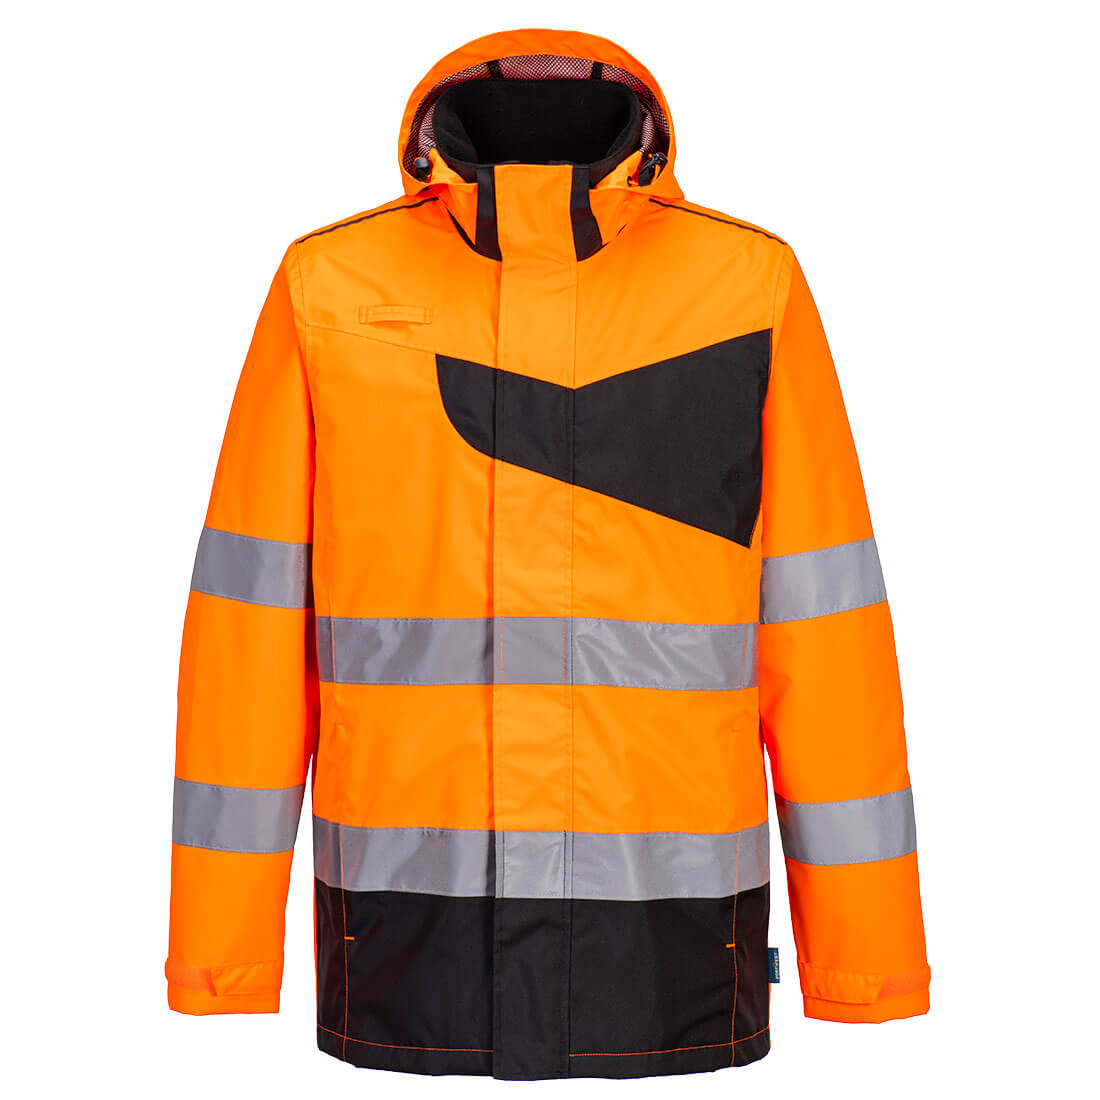 Portwest PW265 PW2 Hi-Vis Rain Jacket Orange Black